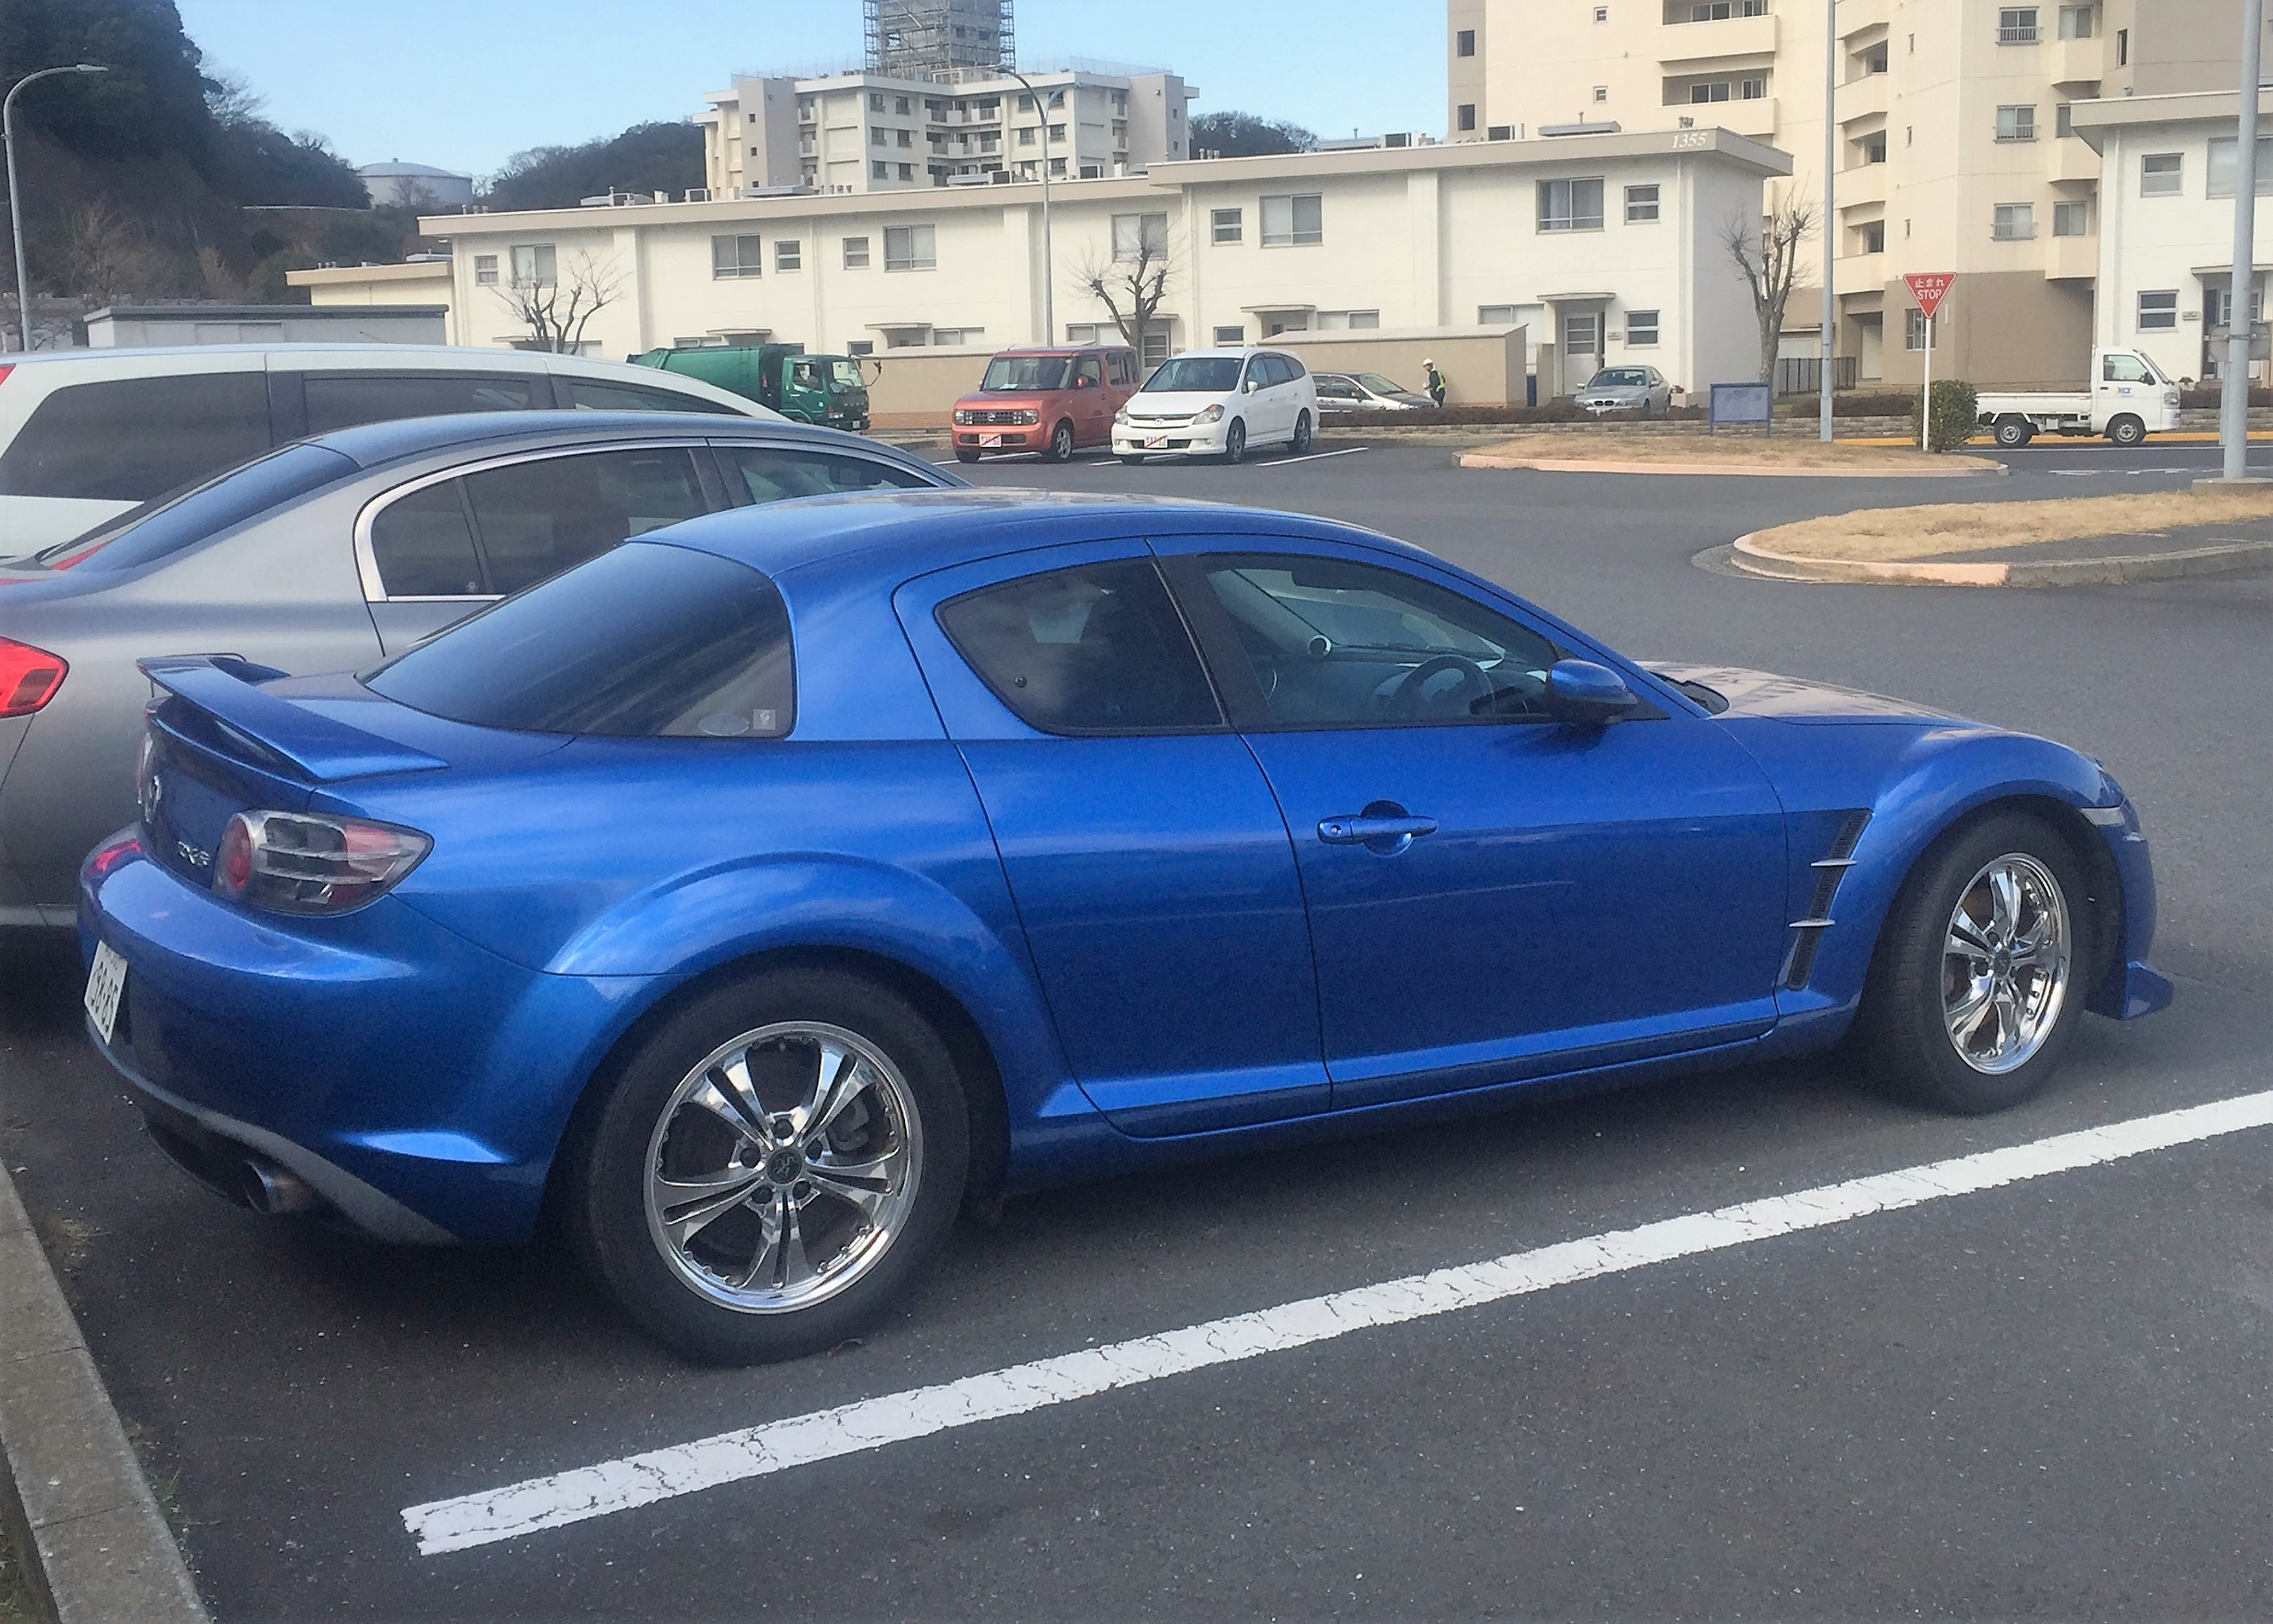 Mazda RX-8 side at United States Fleet Activities Yokosuka Lemon Lot, © 2016 Thomas Kreutzer/The Truth About Cars